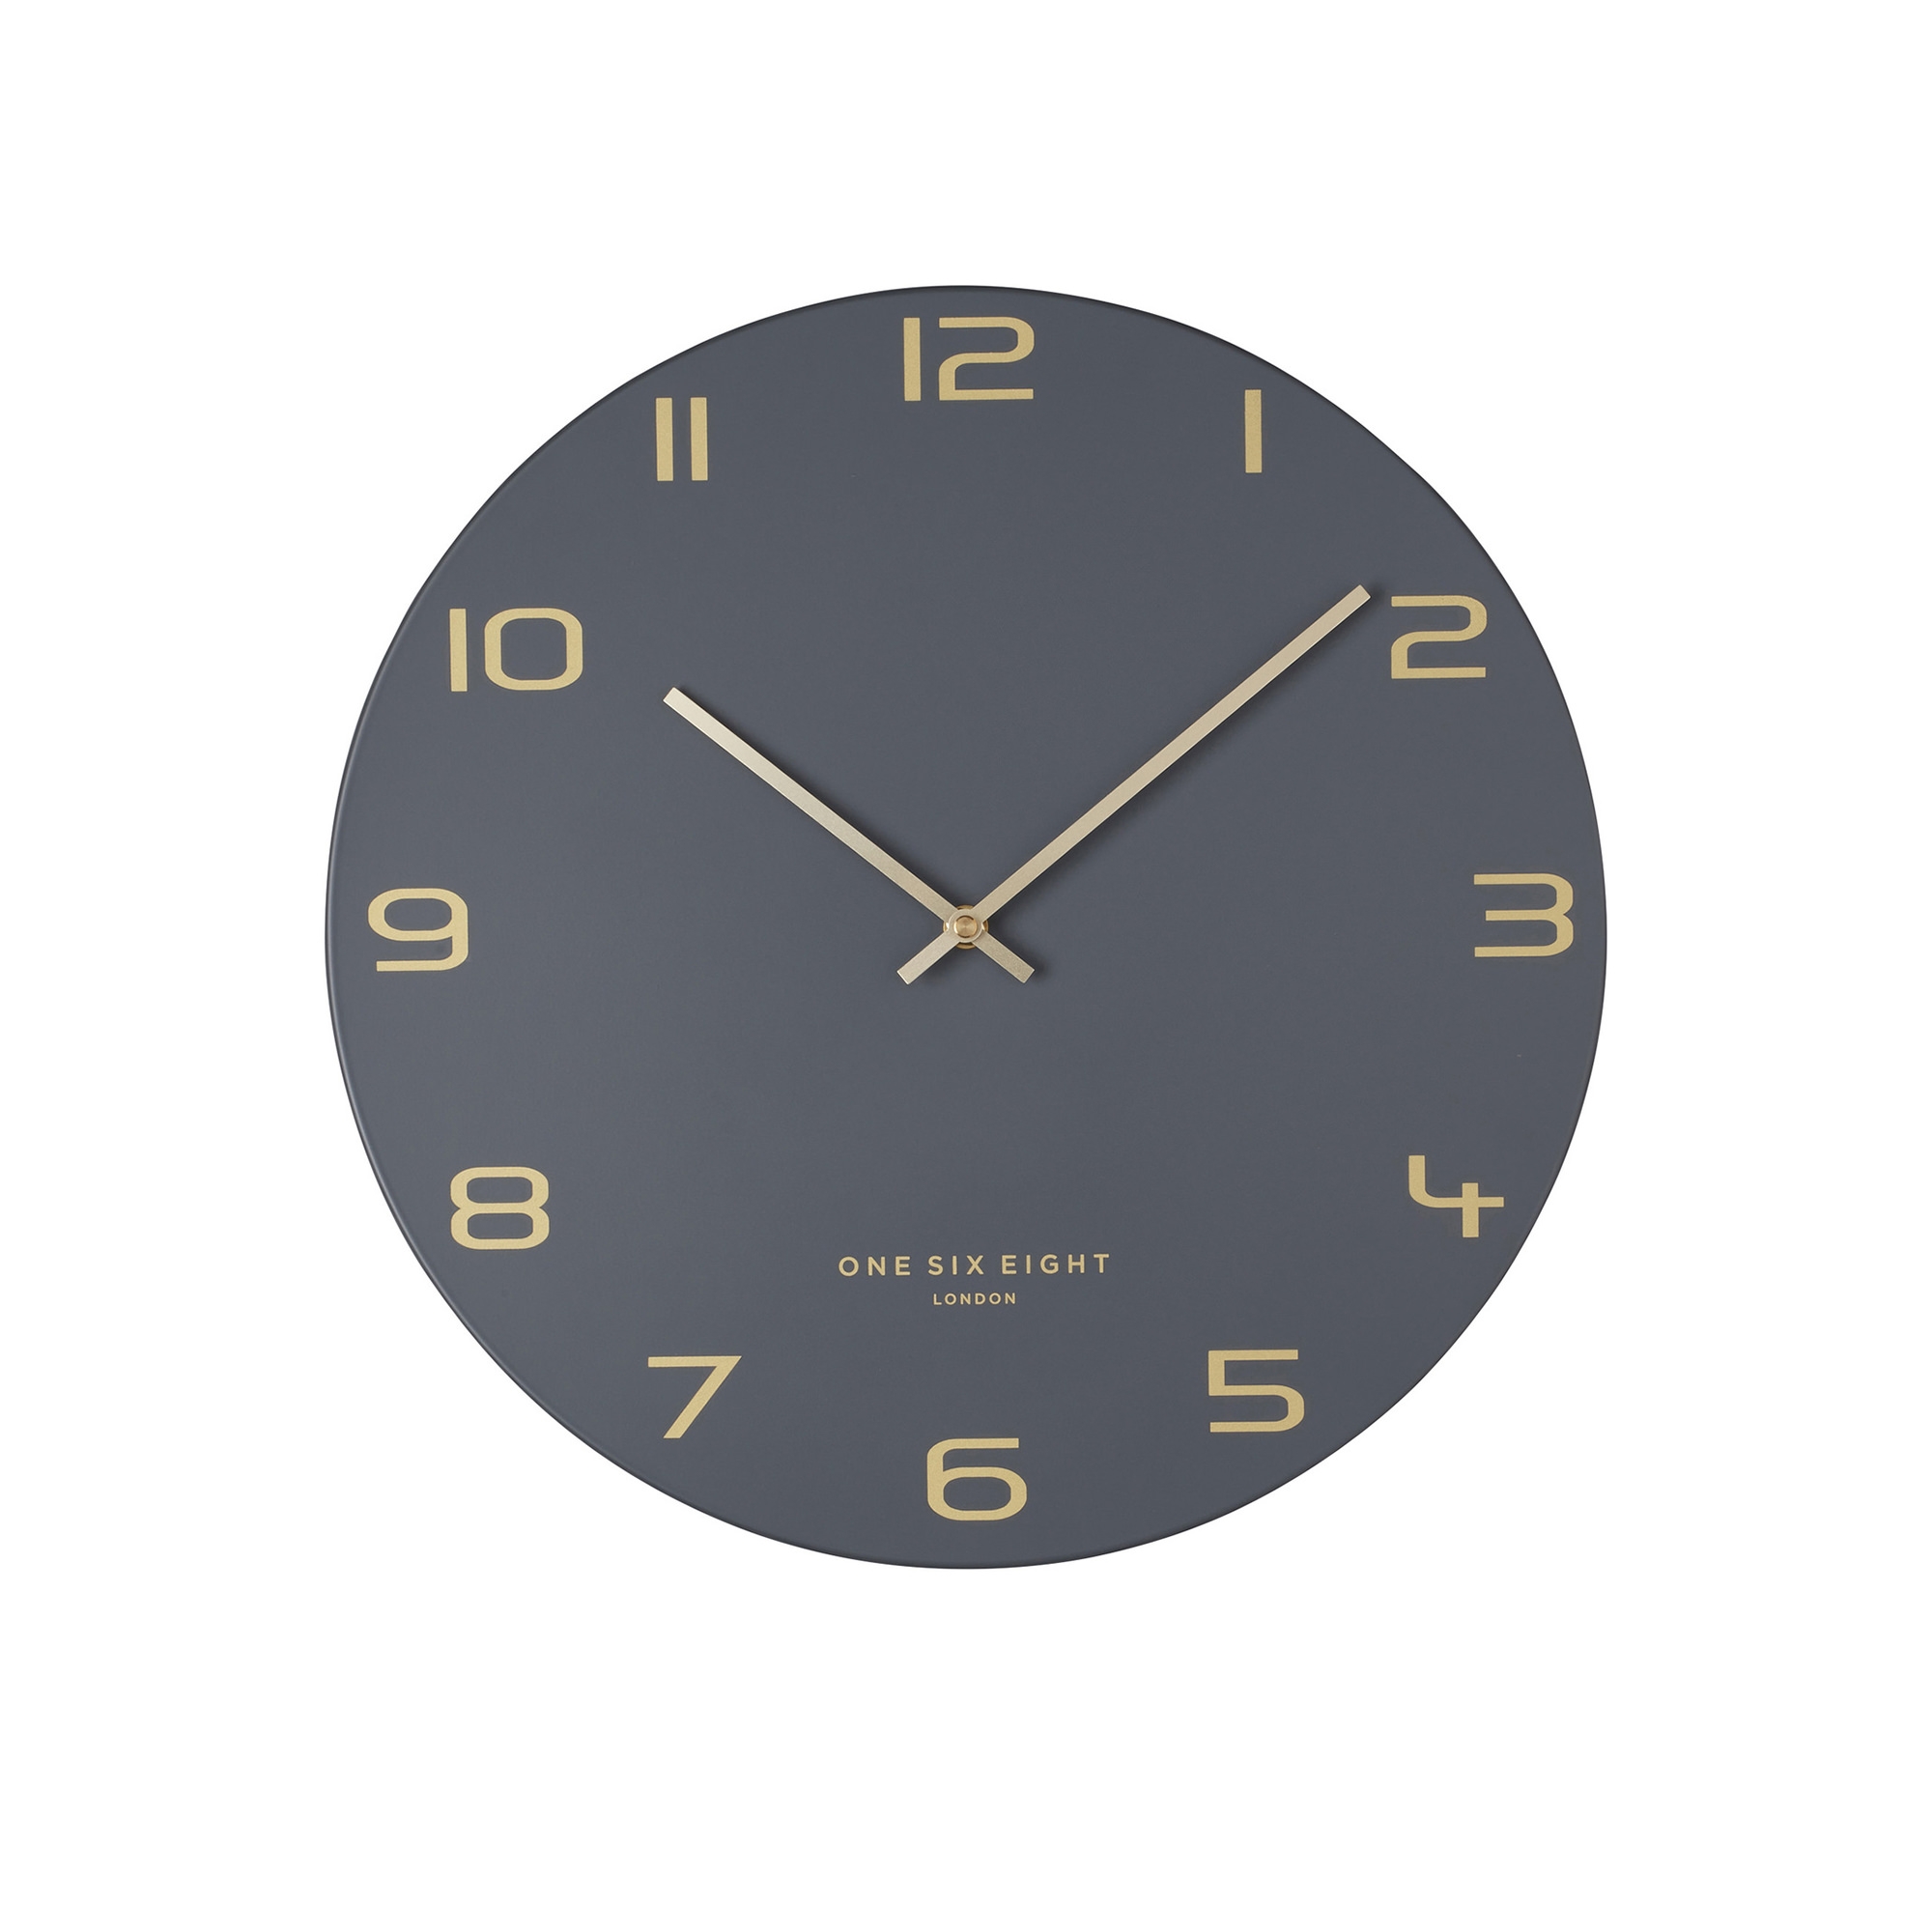 One Six Eight London Blake Silent Wall Clock 30cm Charcoal Grey Image 1